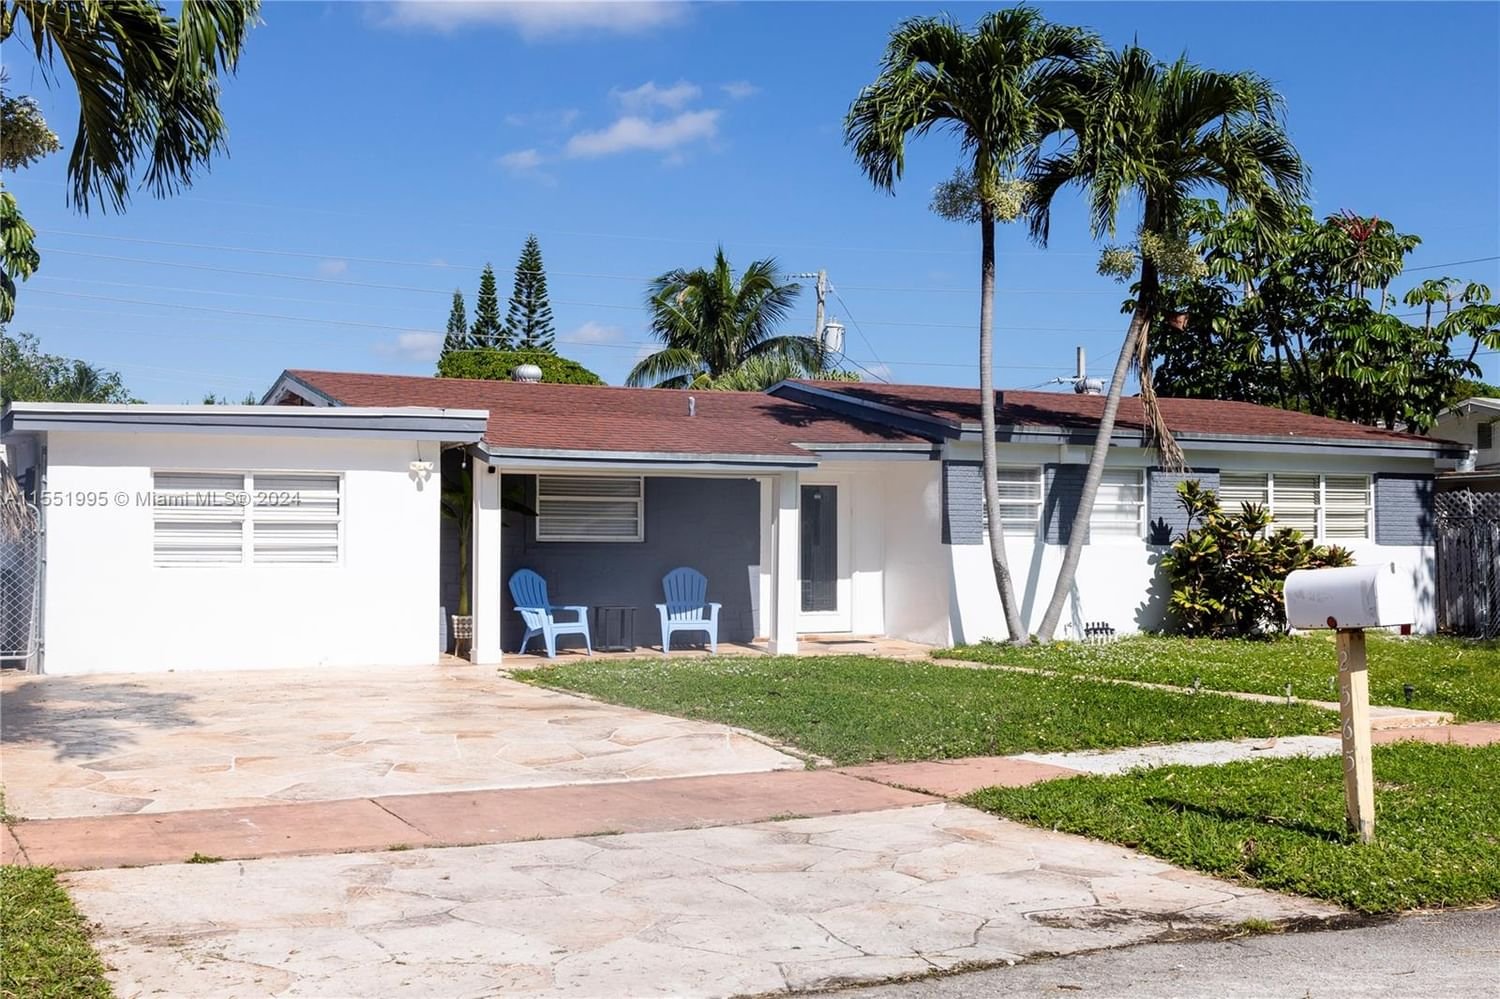 Real estate property located at 2565 214th St, Miami-Dade County, SUNSWEPT ISLE, Miami, FL